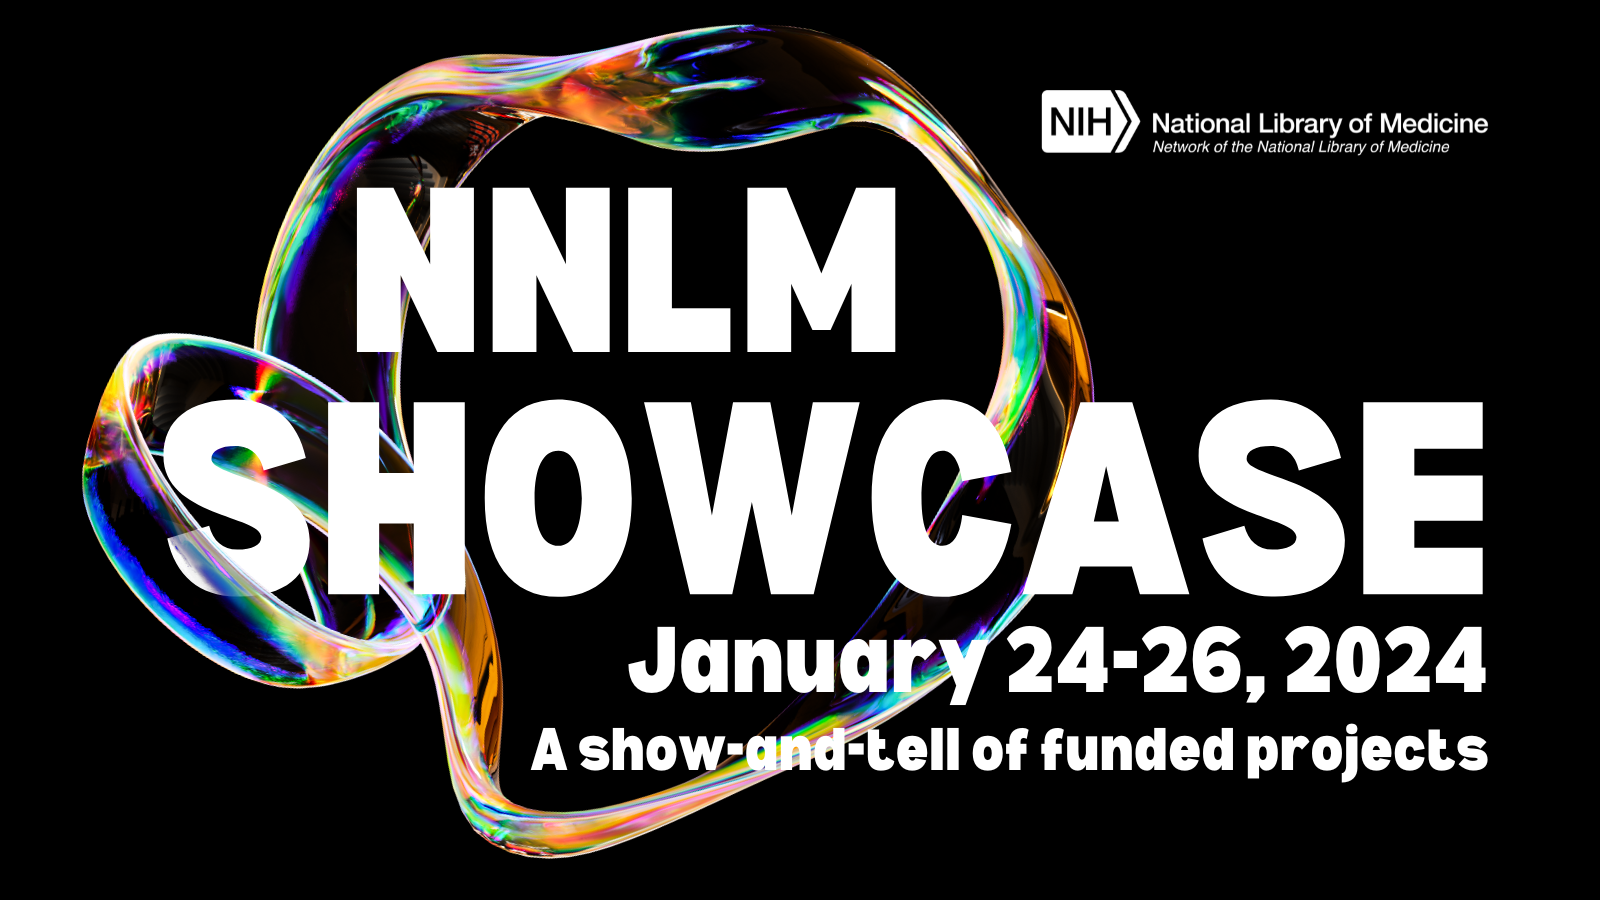 NNLM Showcase